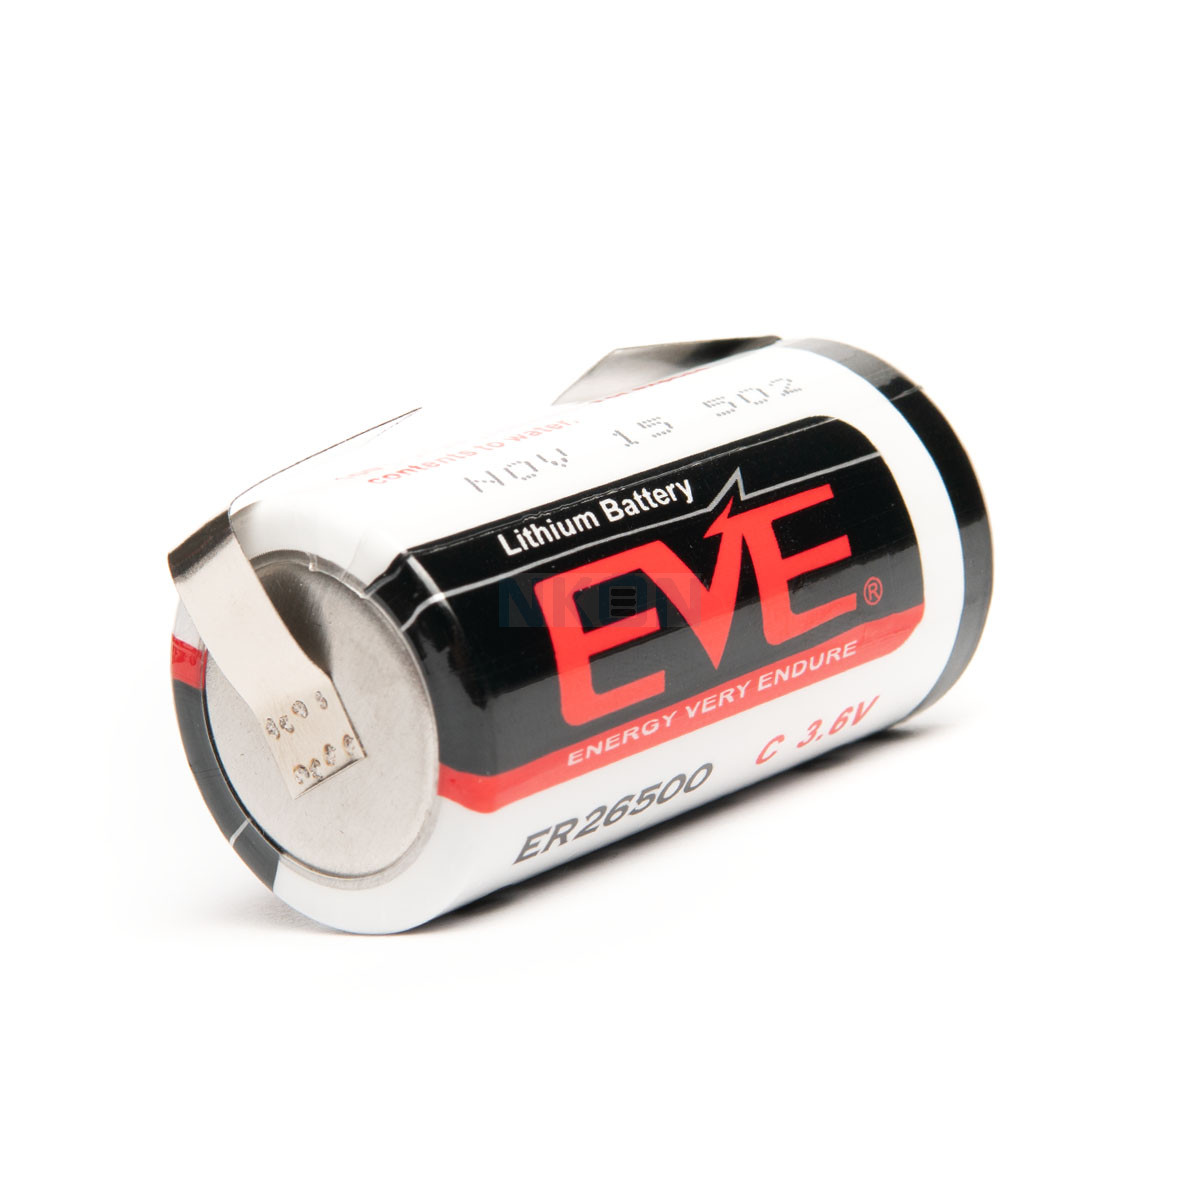 Pile ER26500 / C EVE Lithium 3,6V - Bestpiles